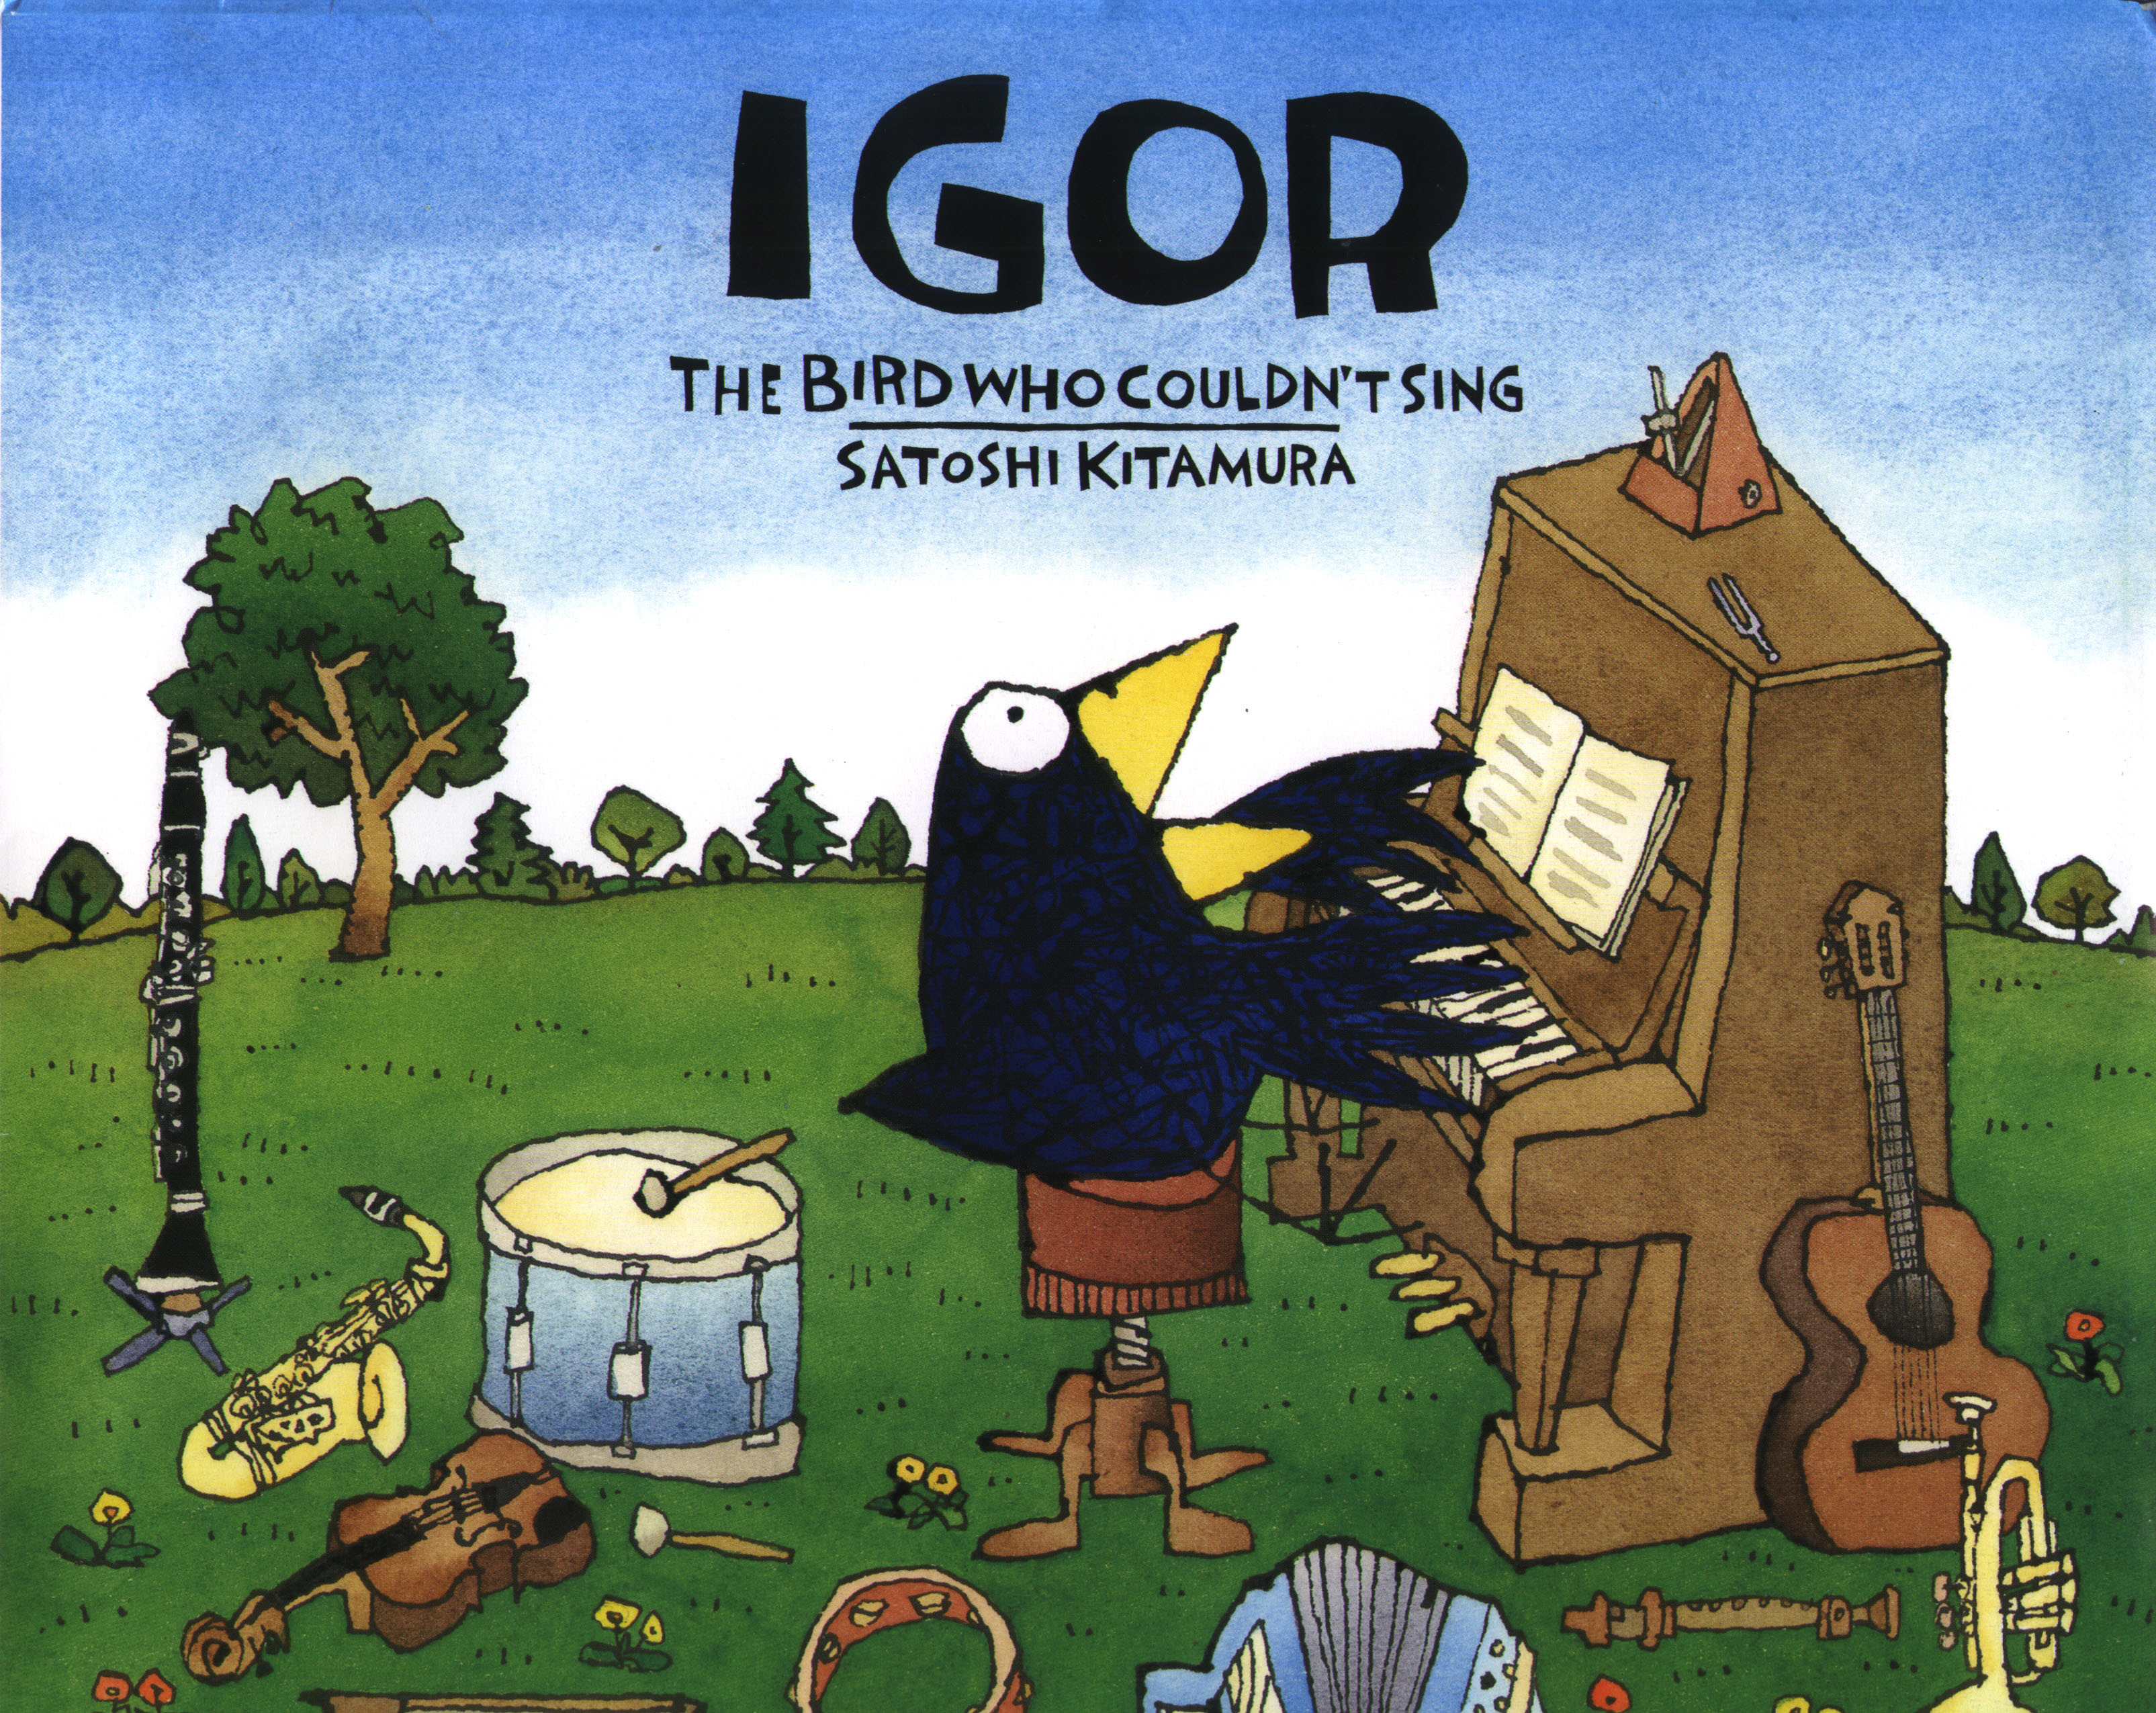 Igor, The Bird Who Couldn't Sing